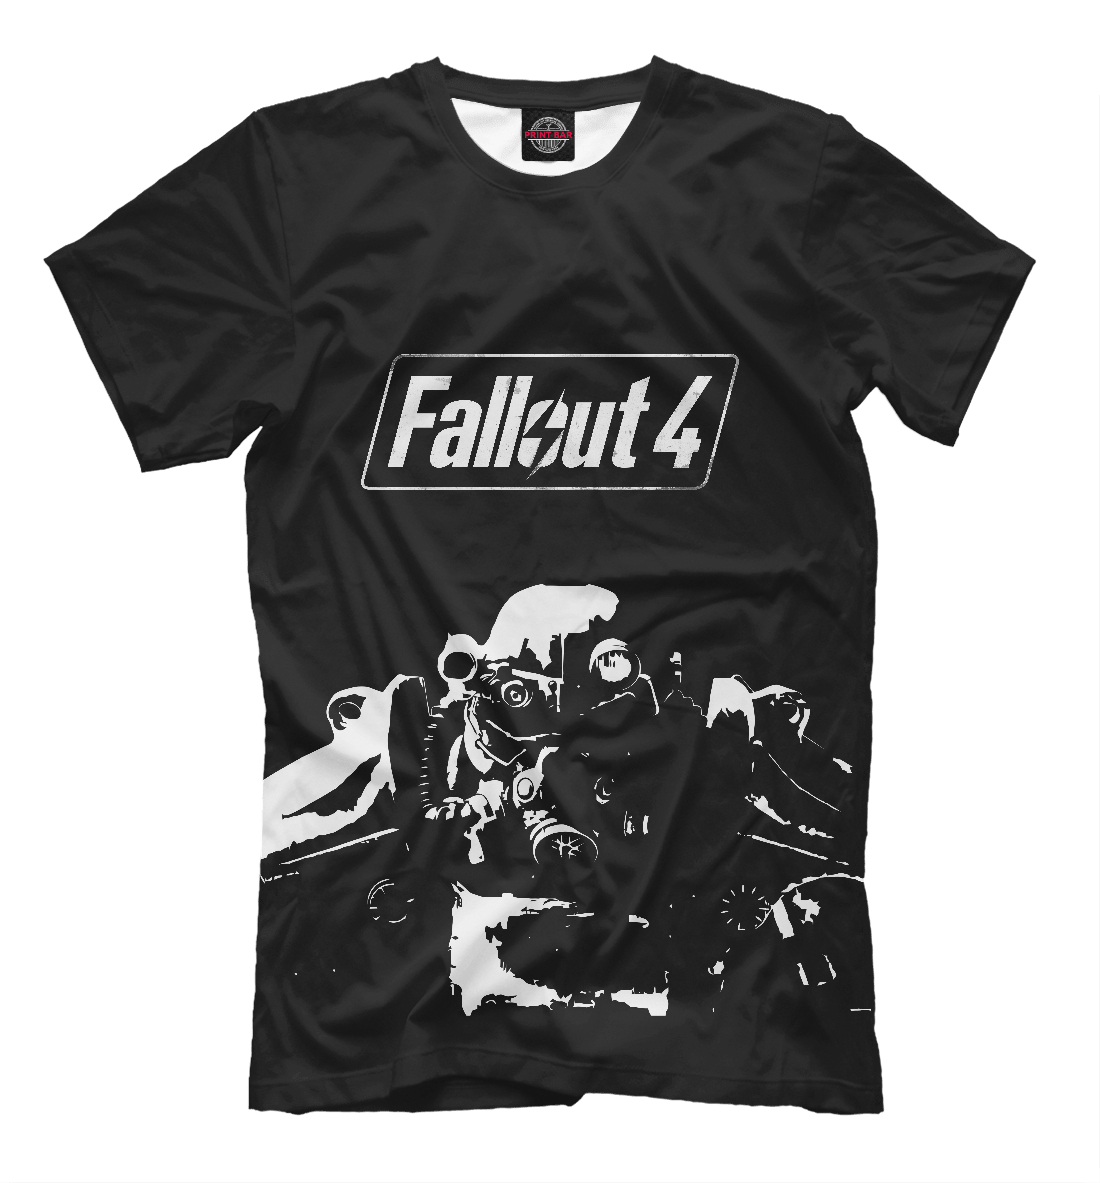 Футболка Fallout 4 для мальчиков, артикул: FOT-734035-fut-2mp